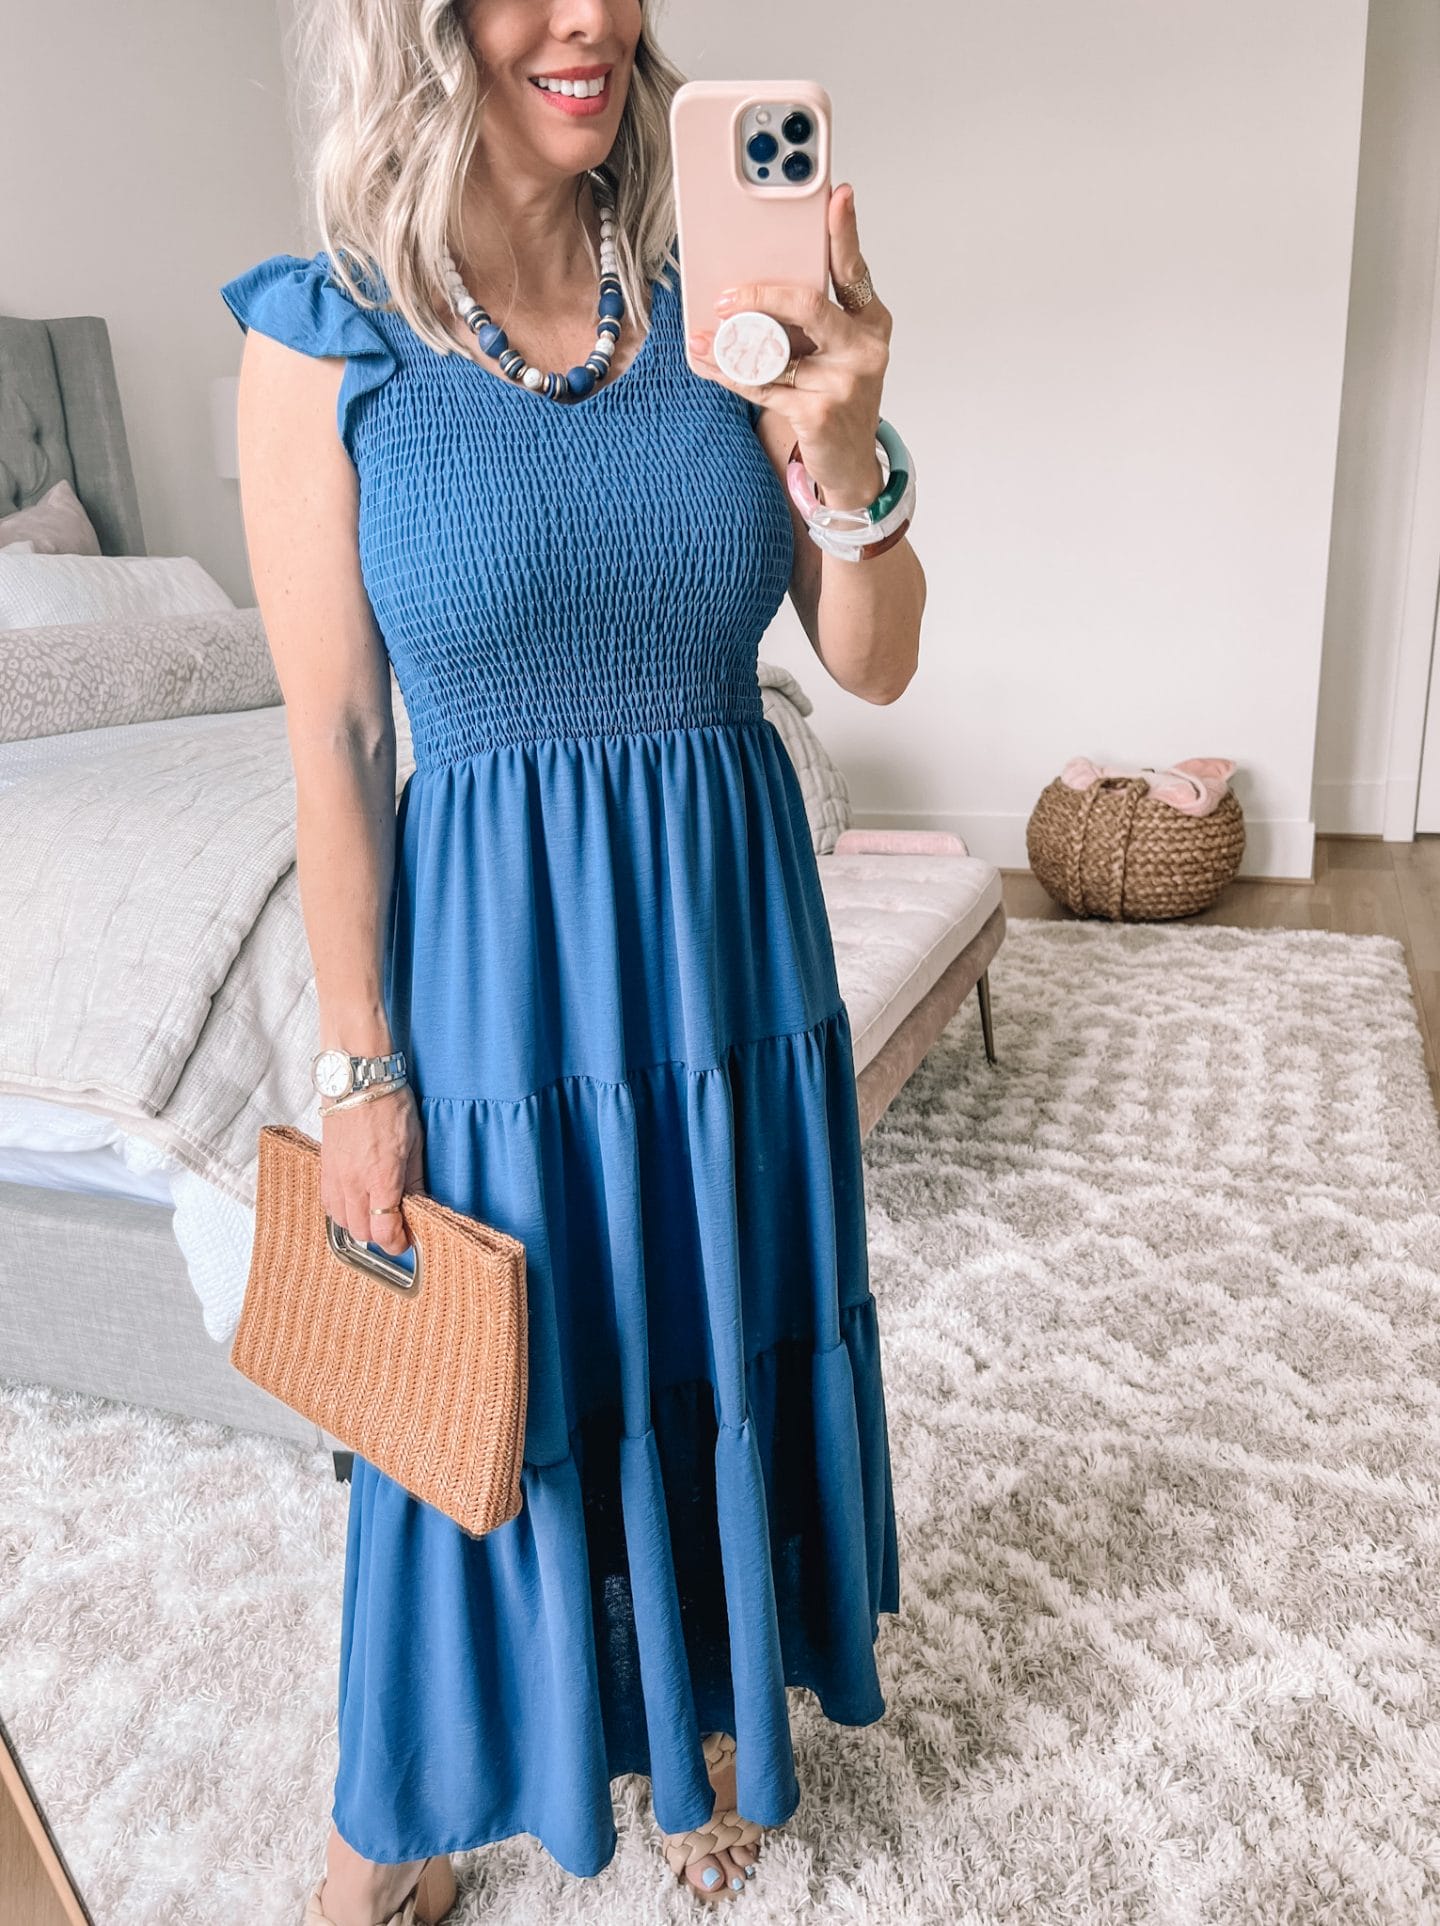 Amazon Fashion, Blue Smocked Maxi Dress, Sandals, Woven Clutch